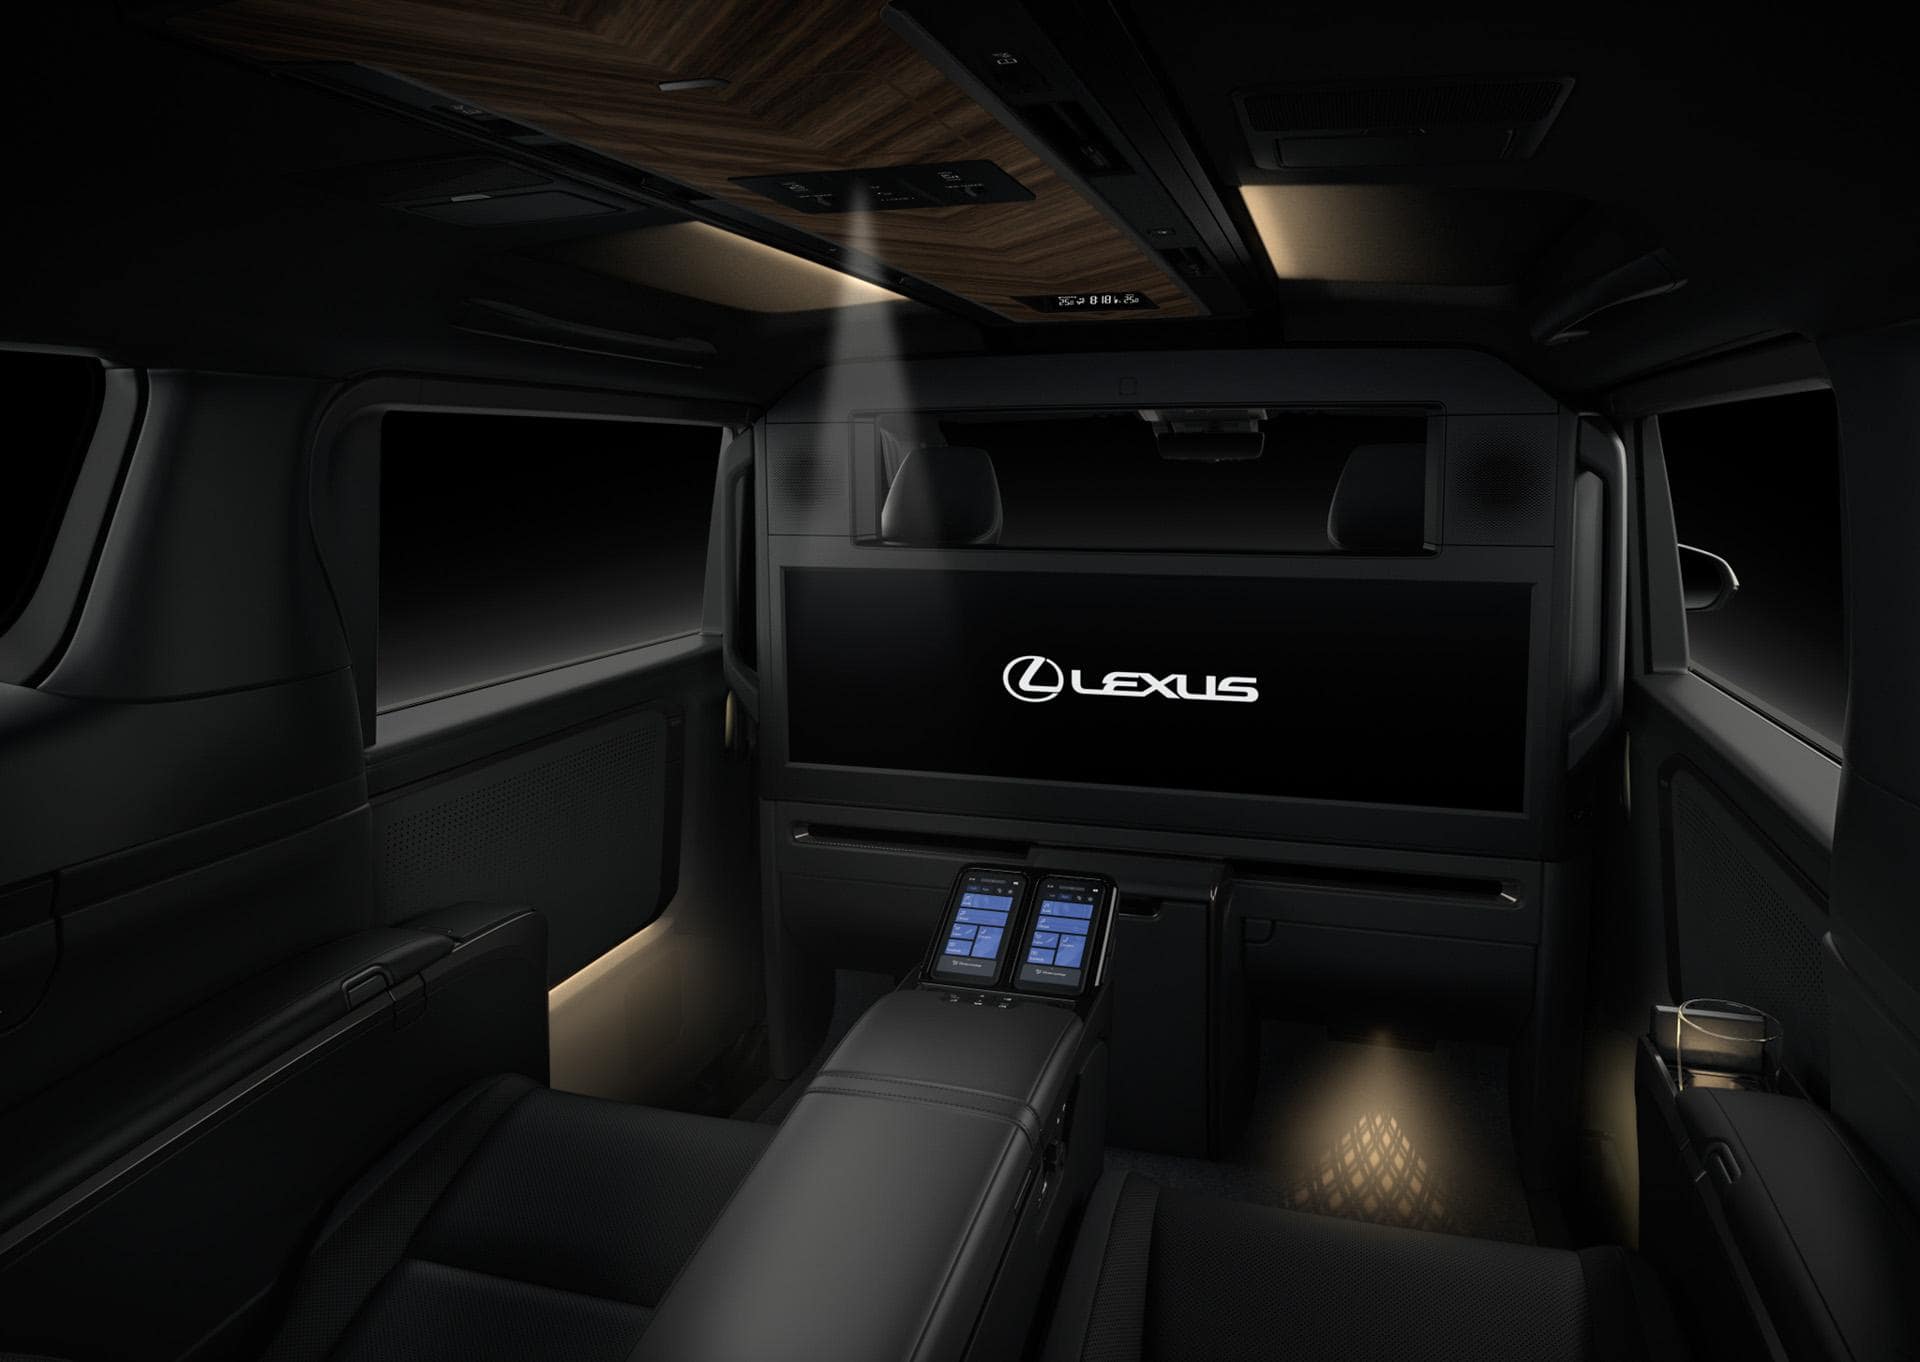 New Lexus LM500H photo: Interior view image (Black) 1